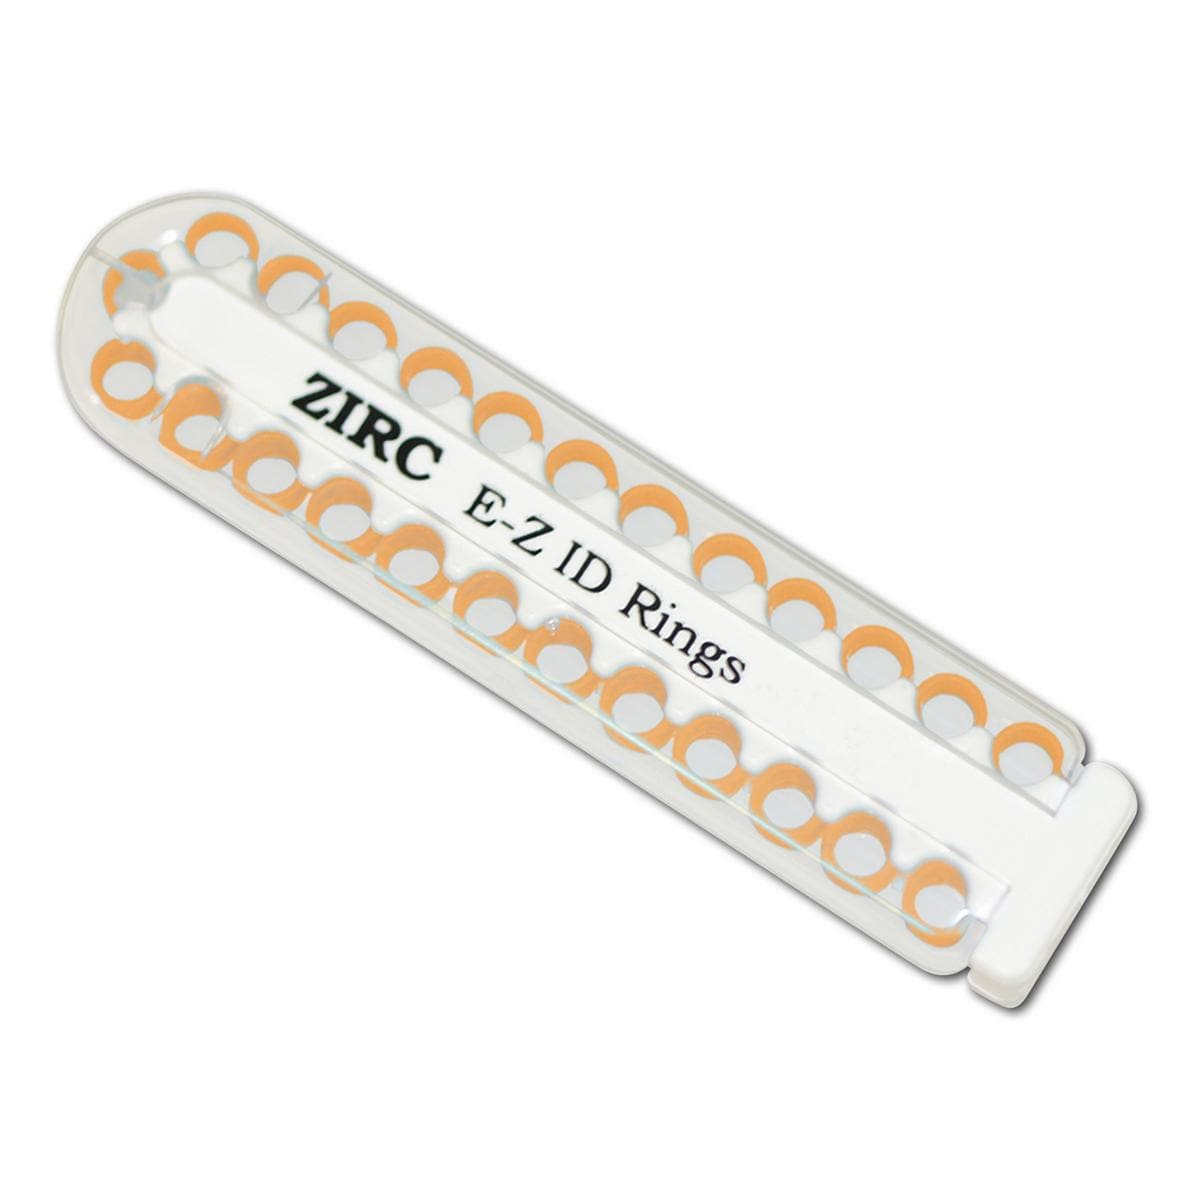 E-Z ID anneaux de marquage Small  3 mm - distributeur - non orange 70Z100Q